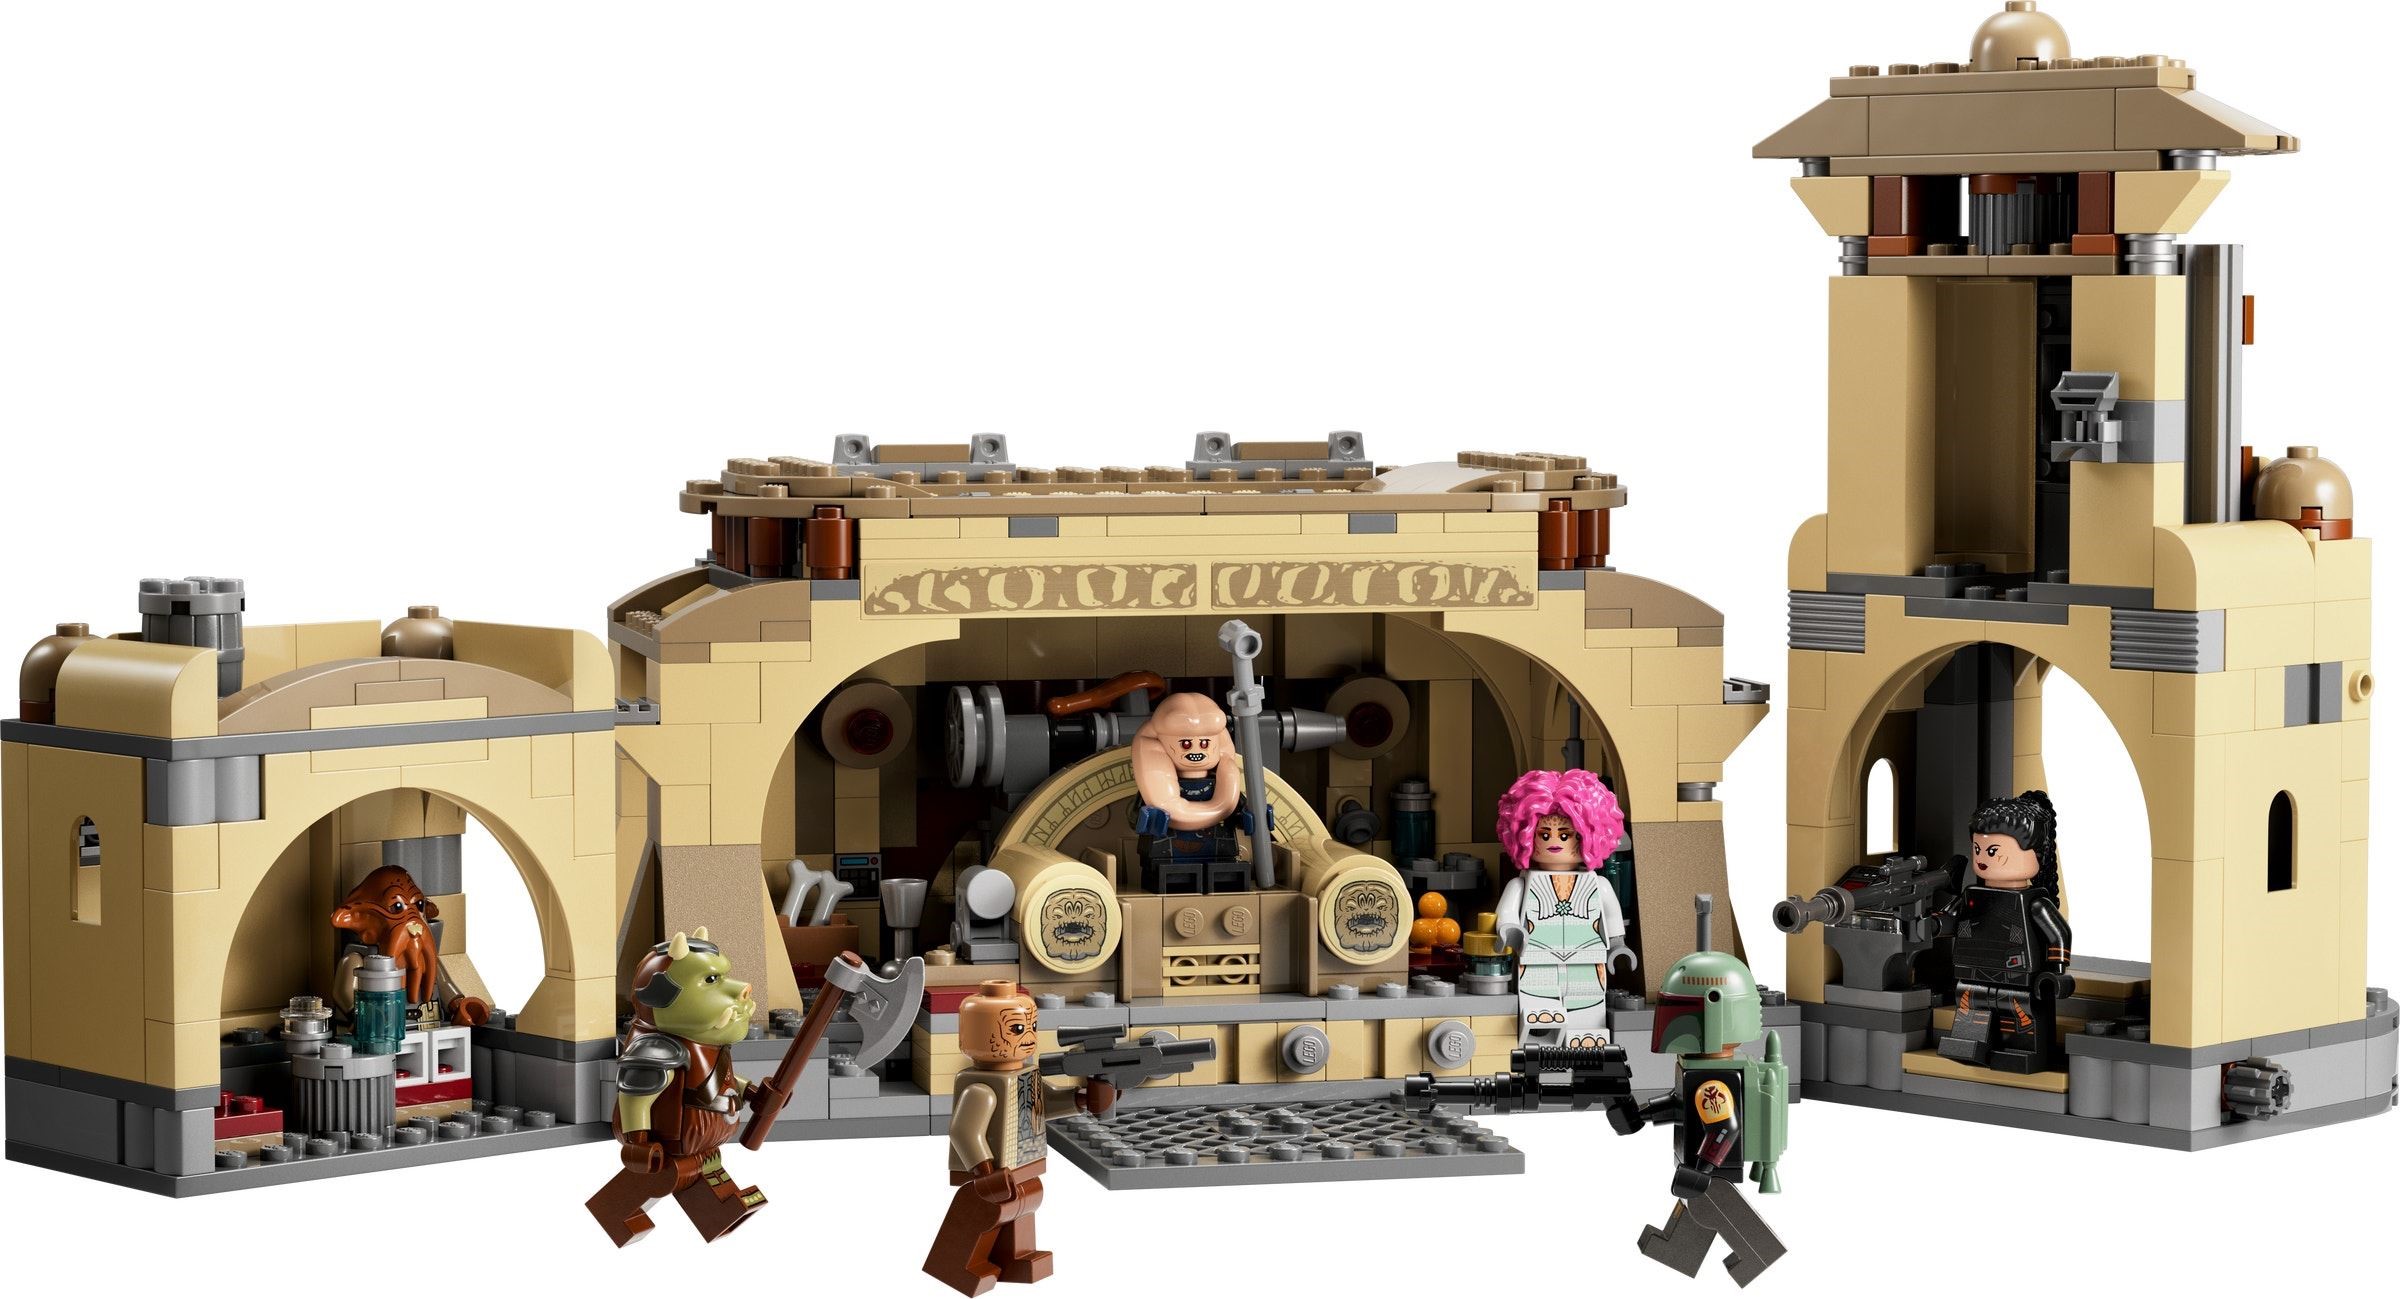 The Chamber Of Secrets! - Hogwarts Modular Lego MOC Series Episode 6 